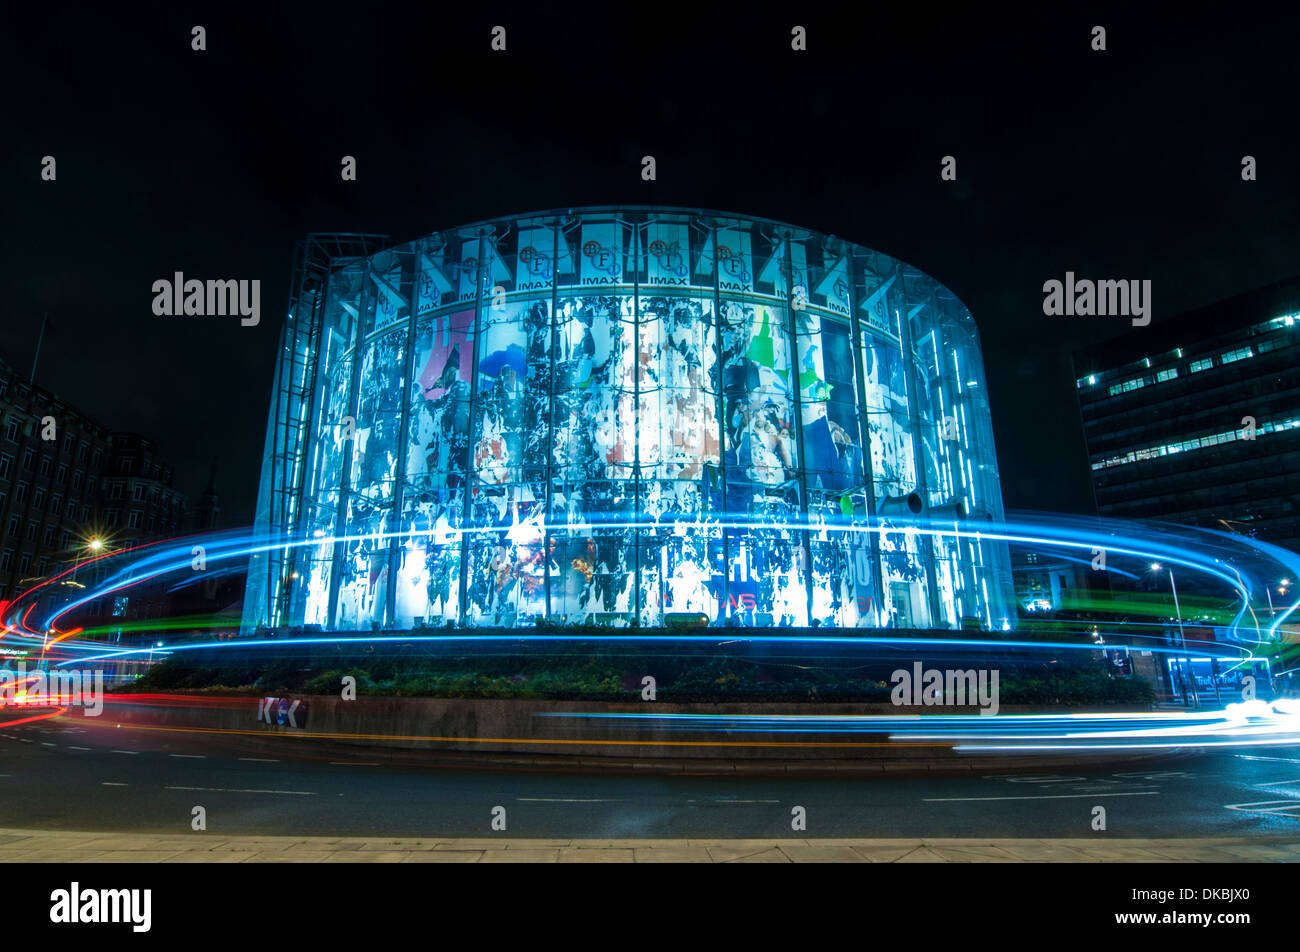 Waterloo Bridge, London, UK - traffic passes by the IMAX cinema at night Stock Photo